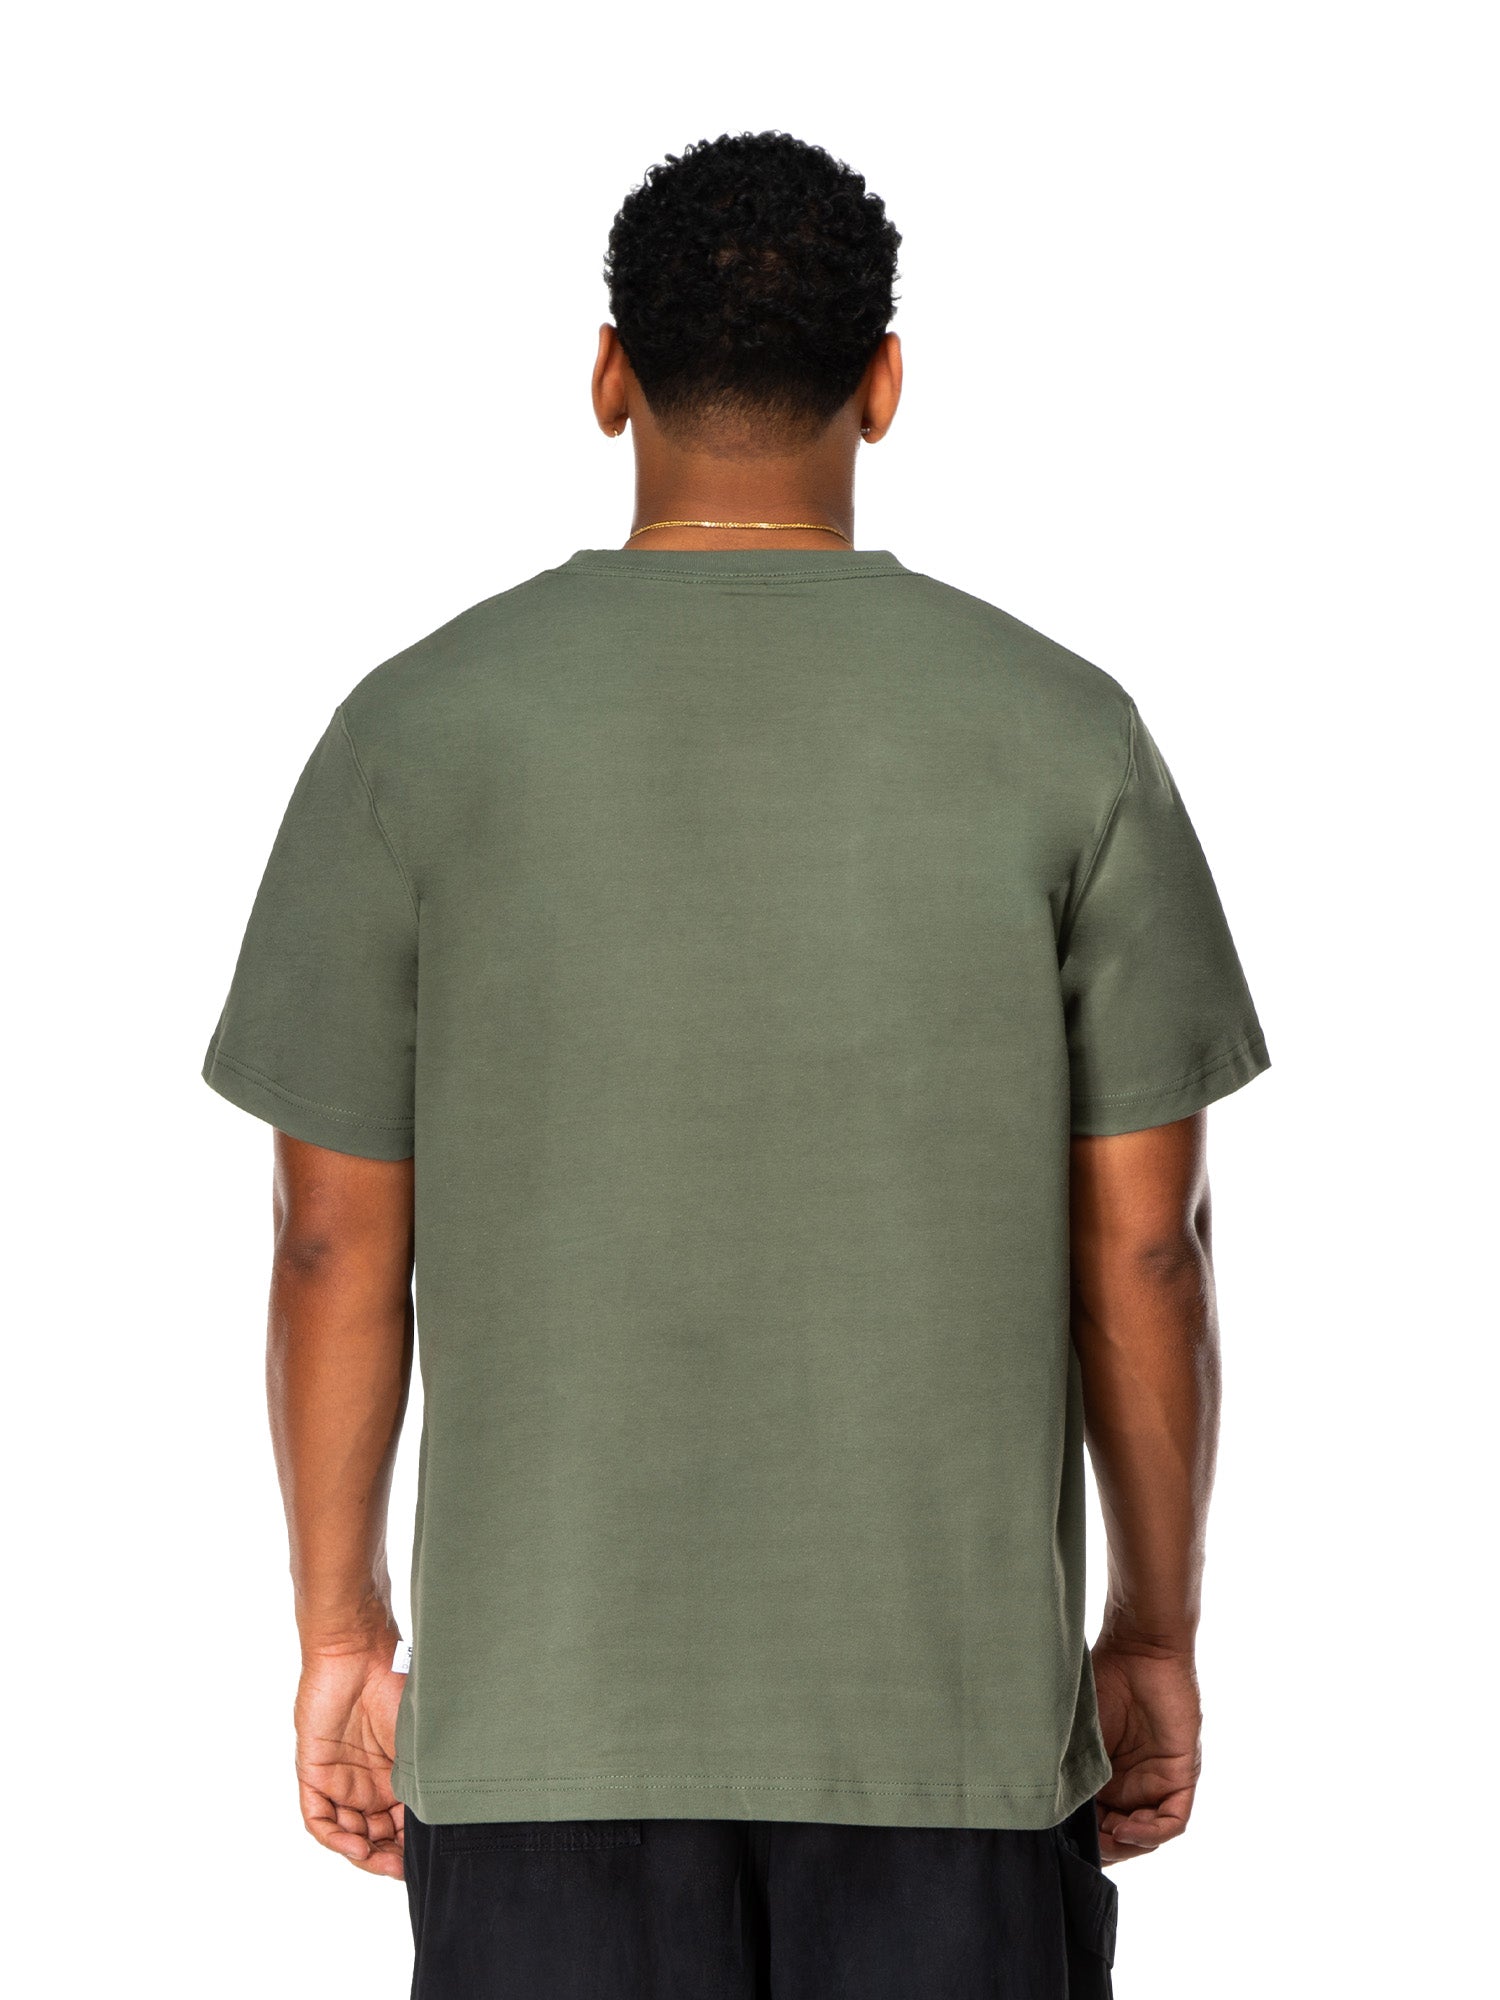 Michael - T-shirt graphique - Vert